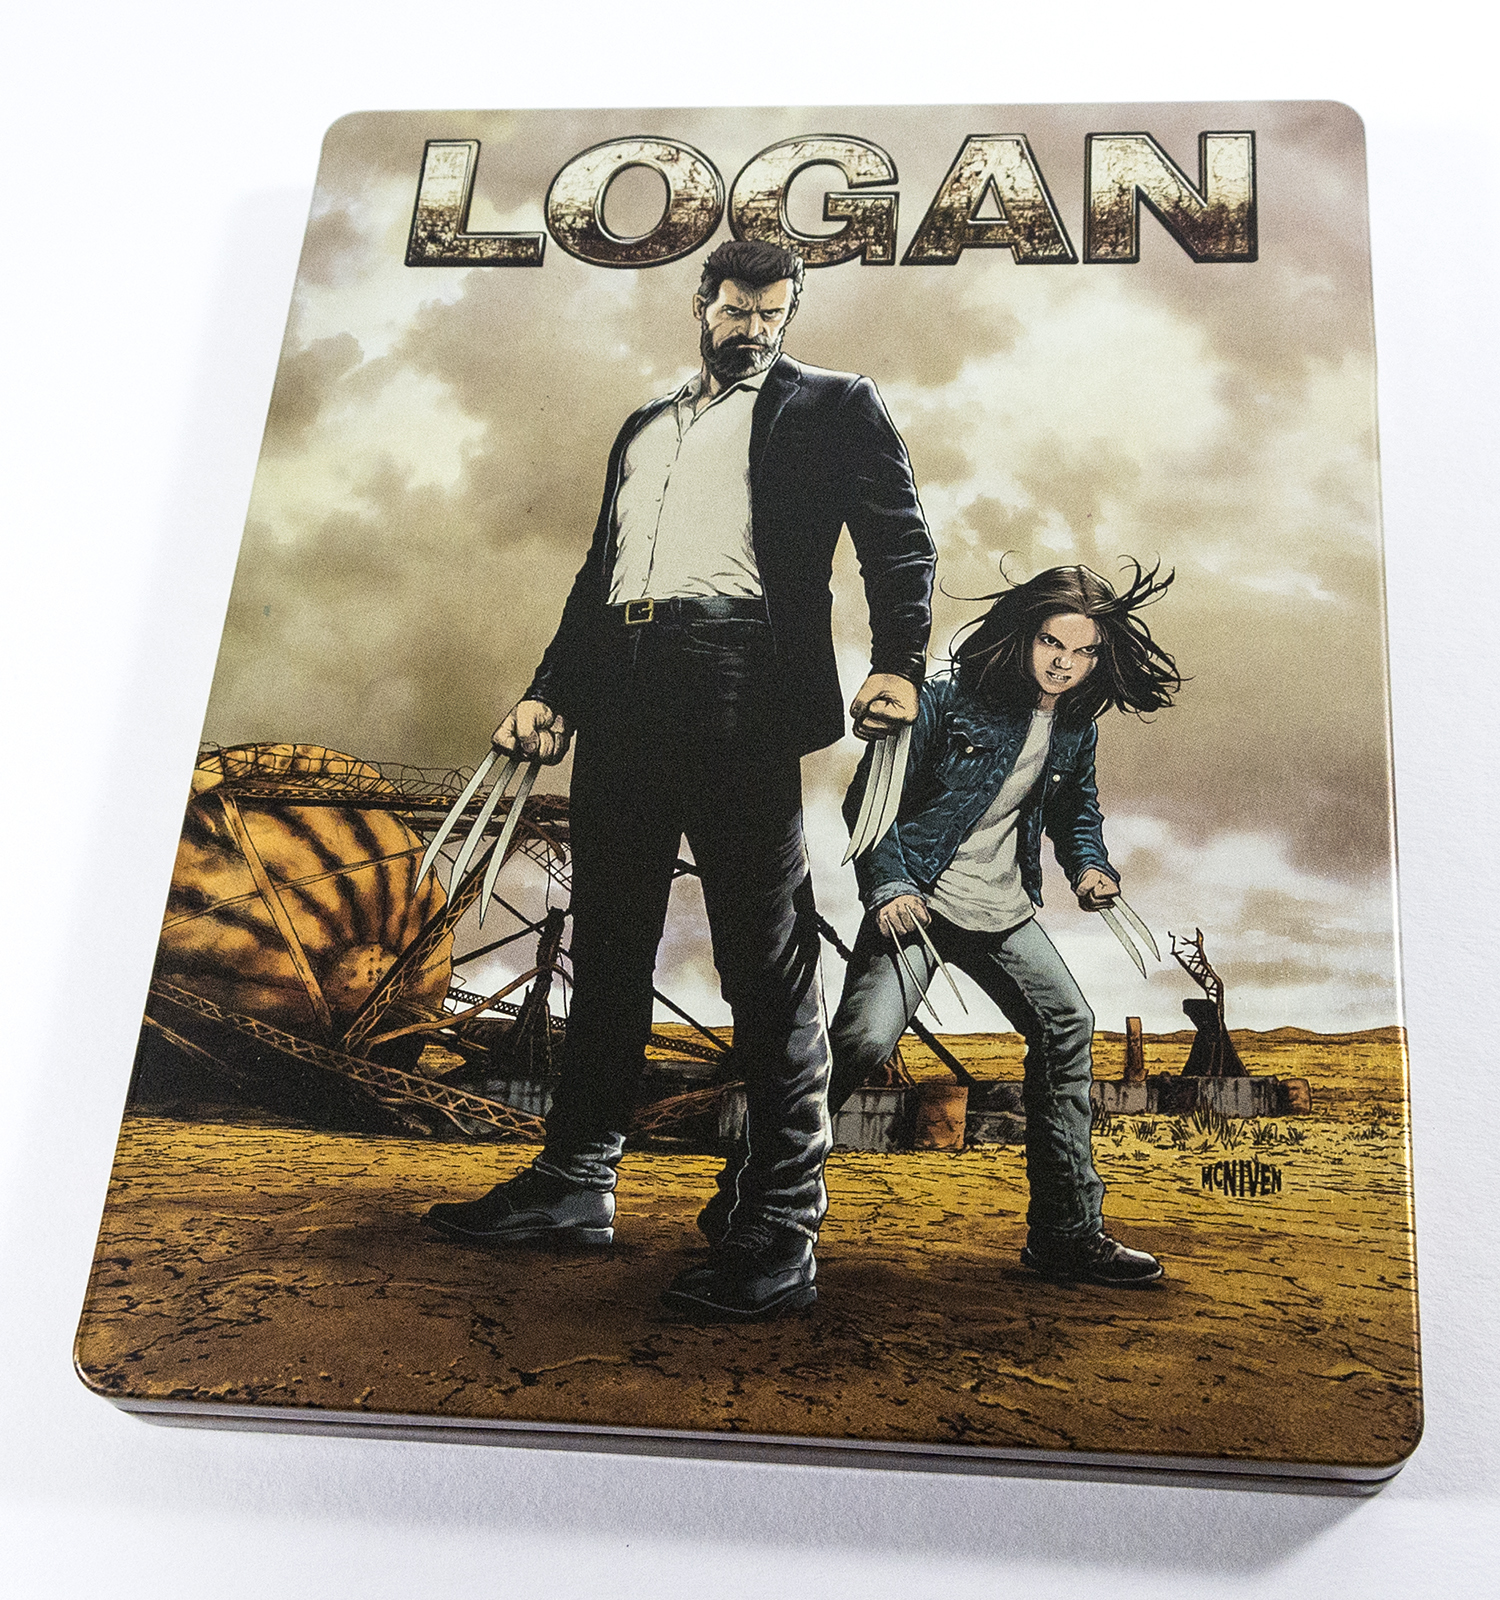 LOGAN steelbook ローガン スチールブック